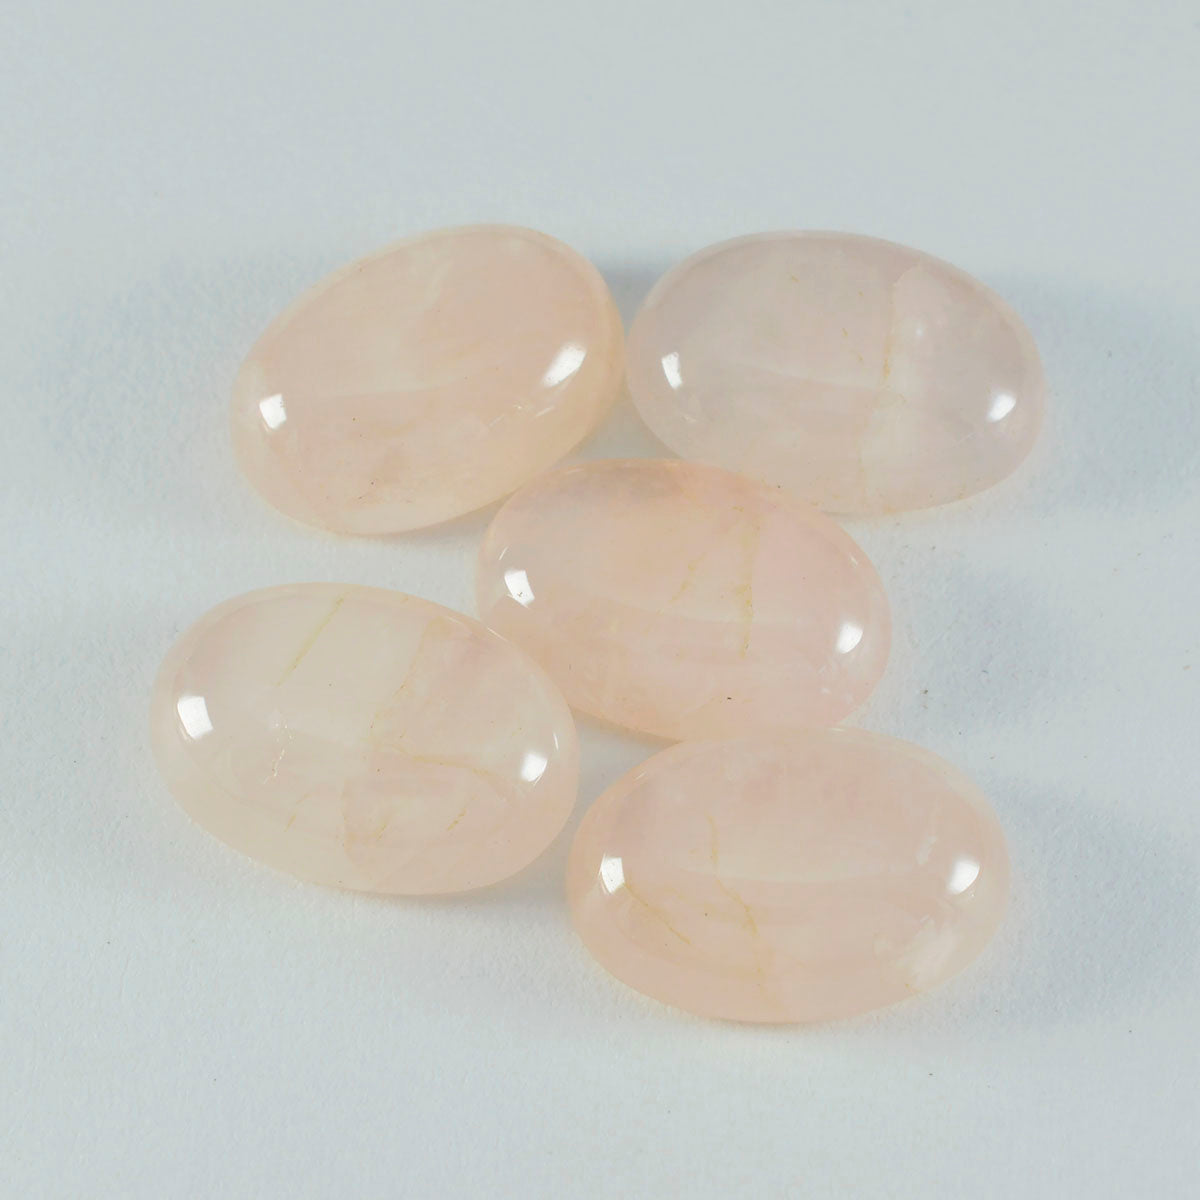 Riyogems 1PC Pink Rose Quartz Cabochon 12x16 mm Oval Shape sweet Quality Stone